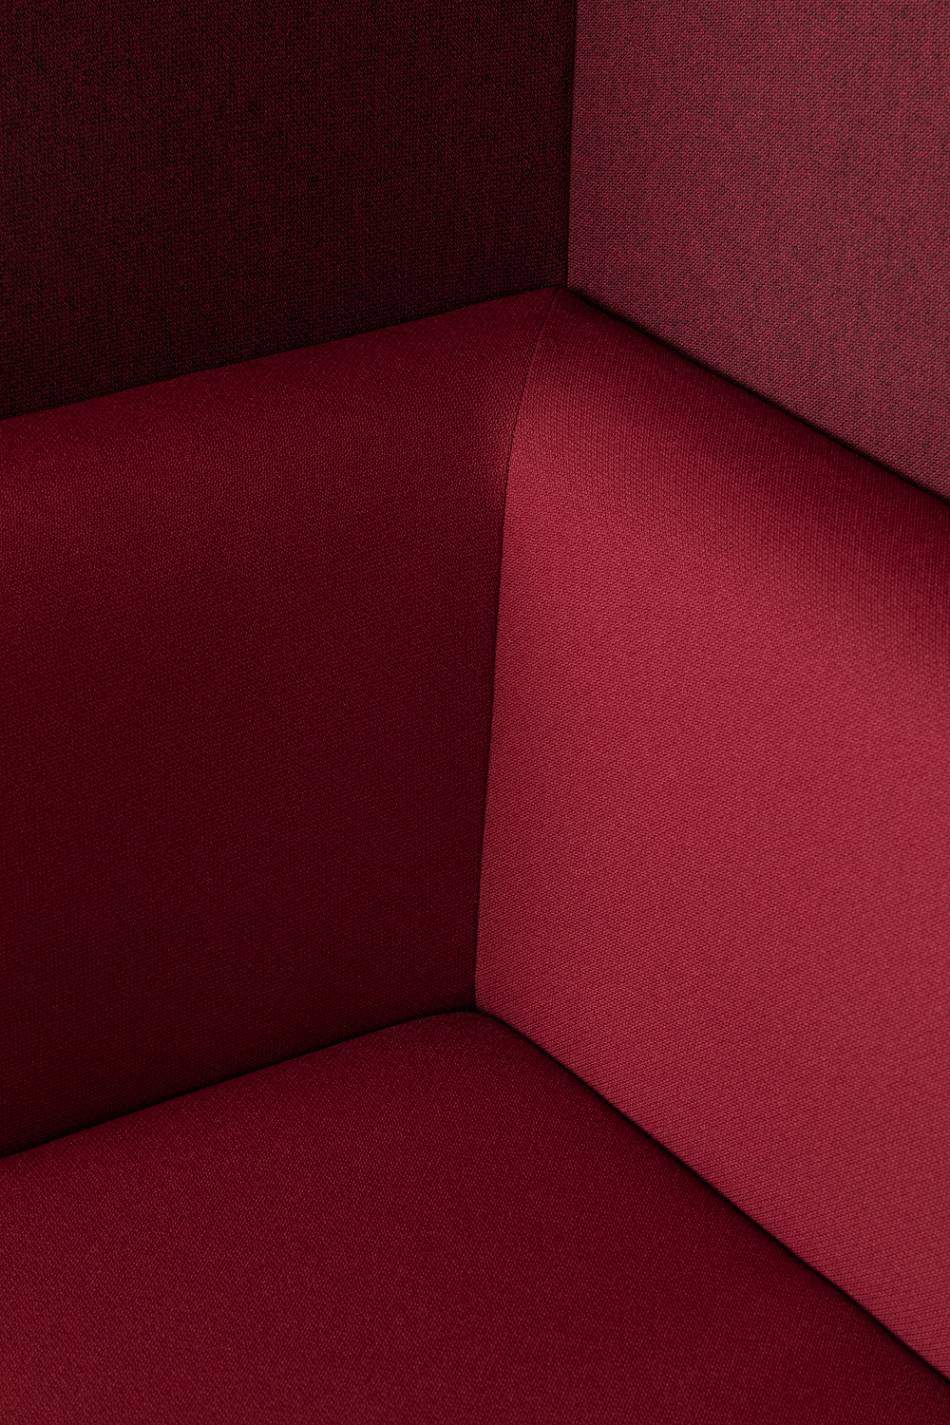 Noti Sona Highback Sofa Design Möbel